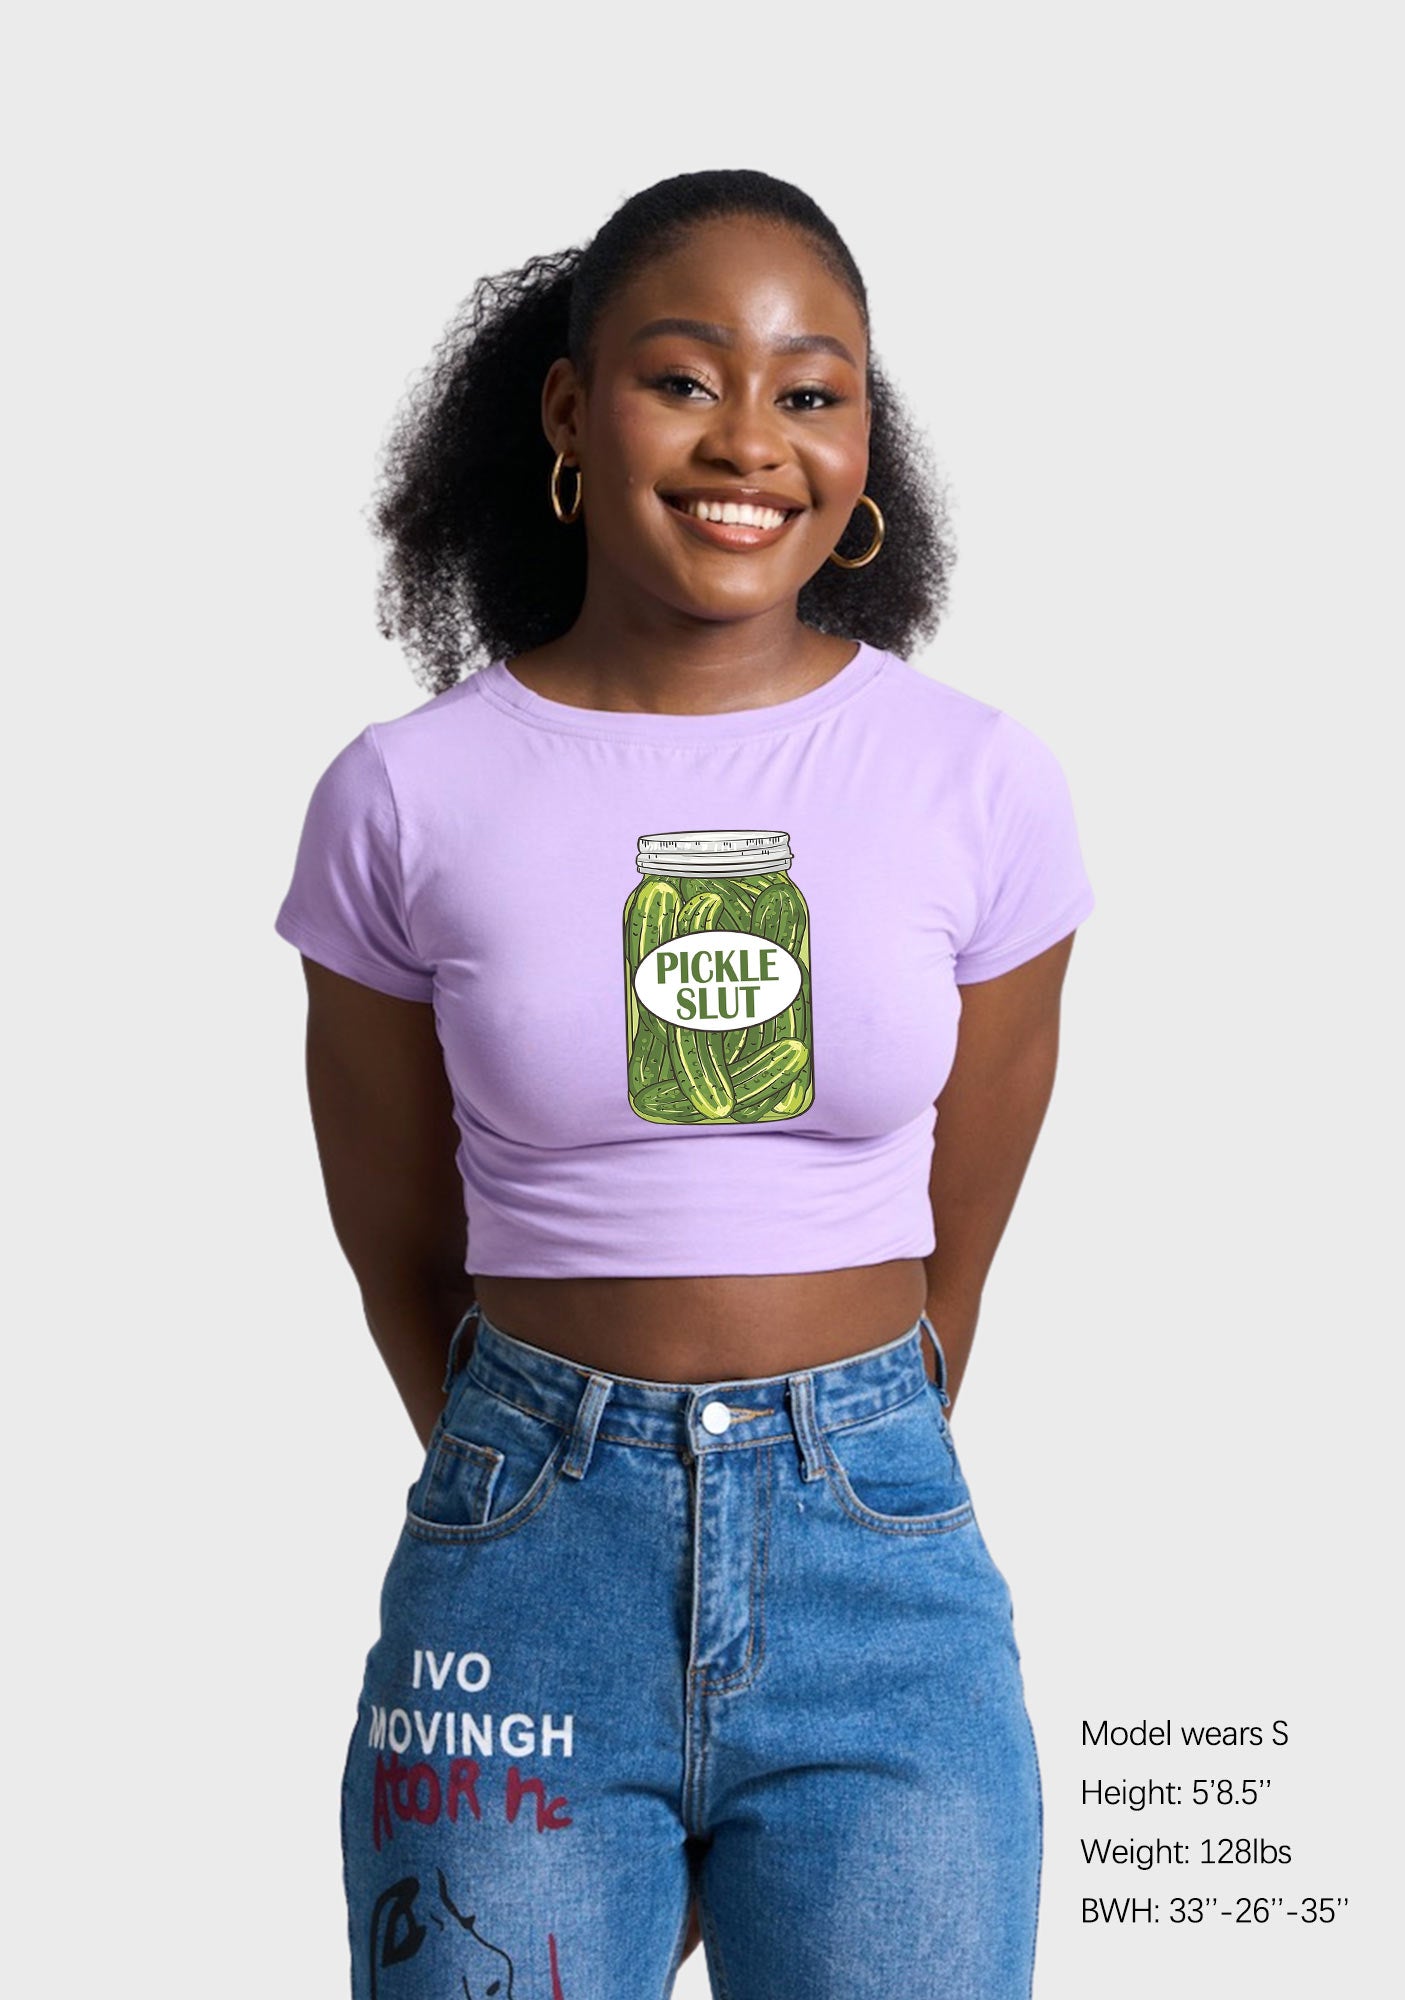 Cherrykitten Pickle Slxt Y2K Baby Tee for Sale